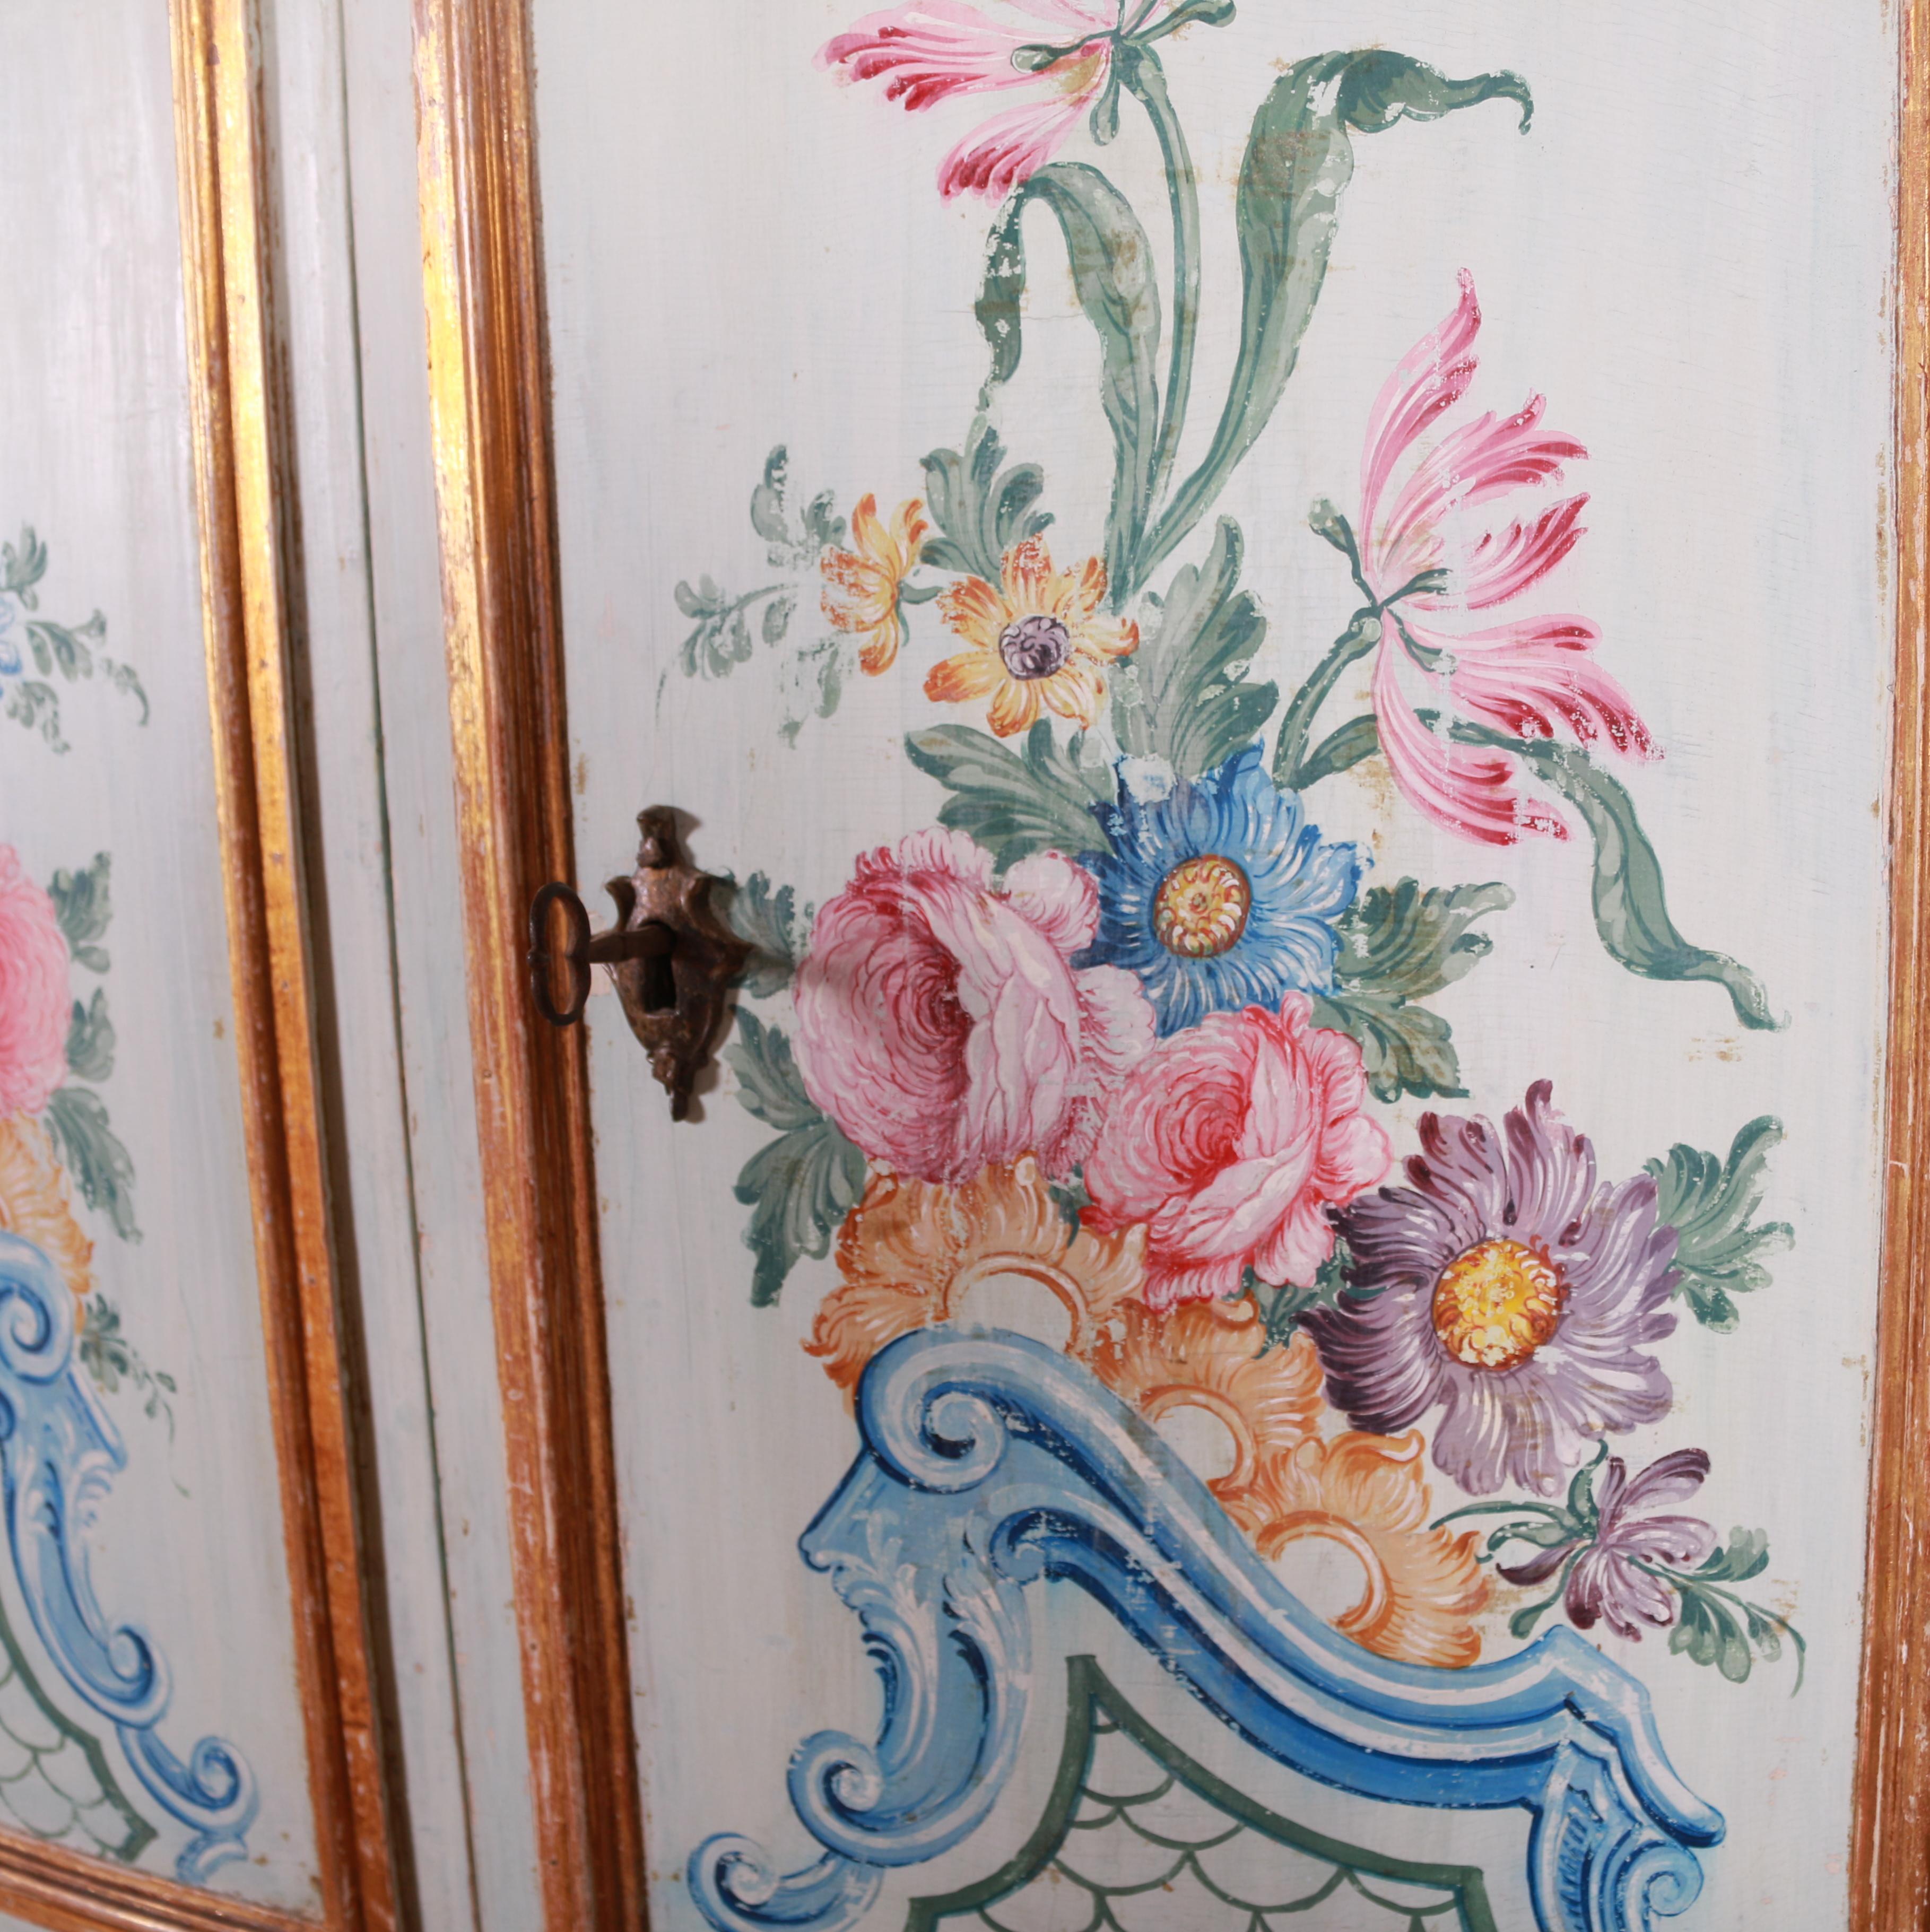 Wood Stunning 18th Century Original Painted Italian Sideboard For Sale